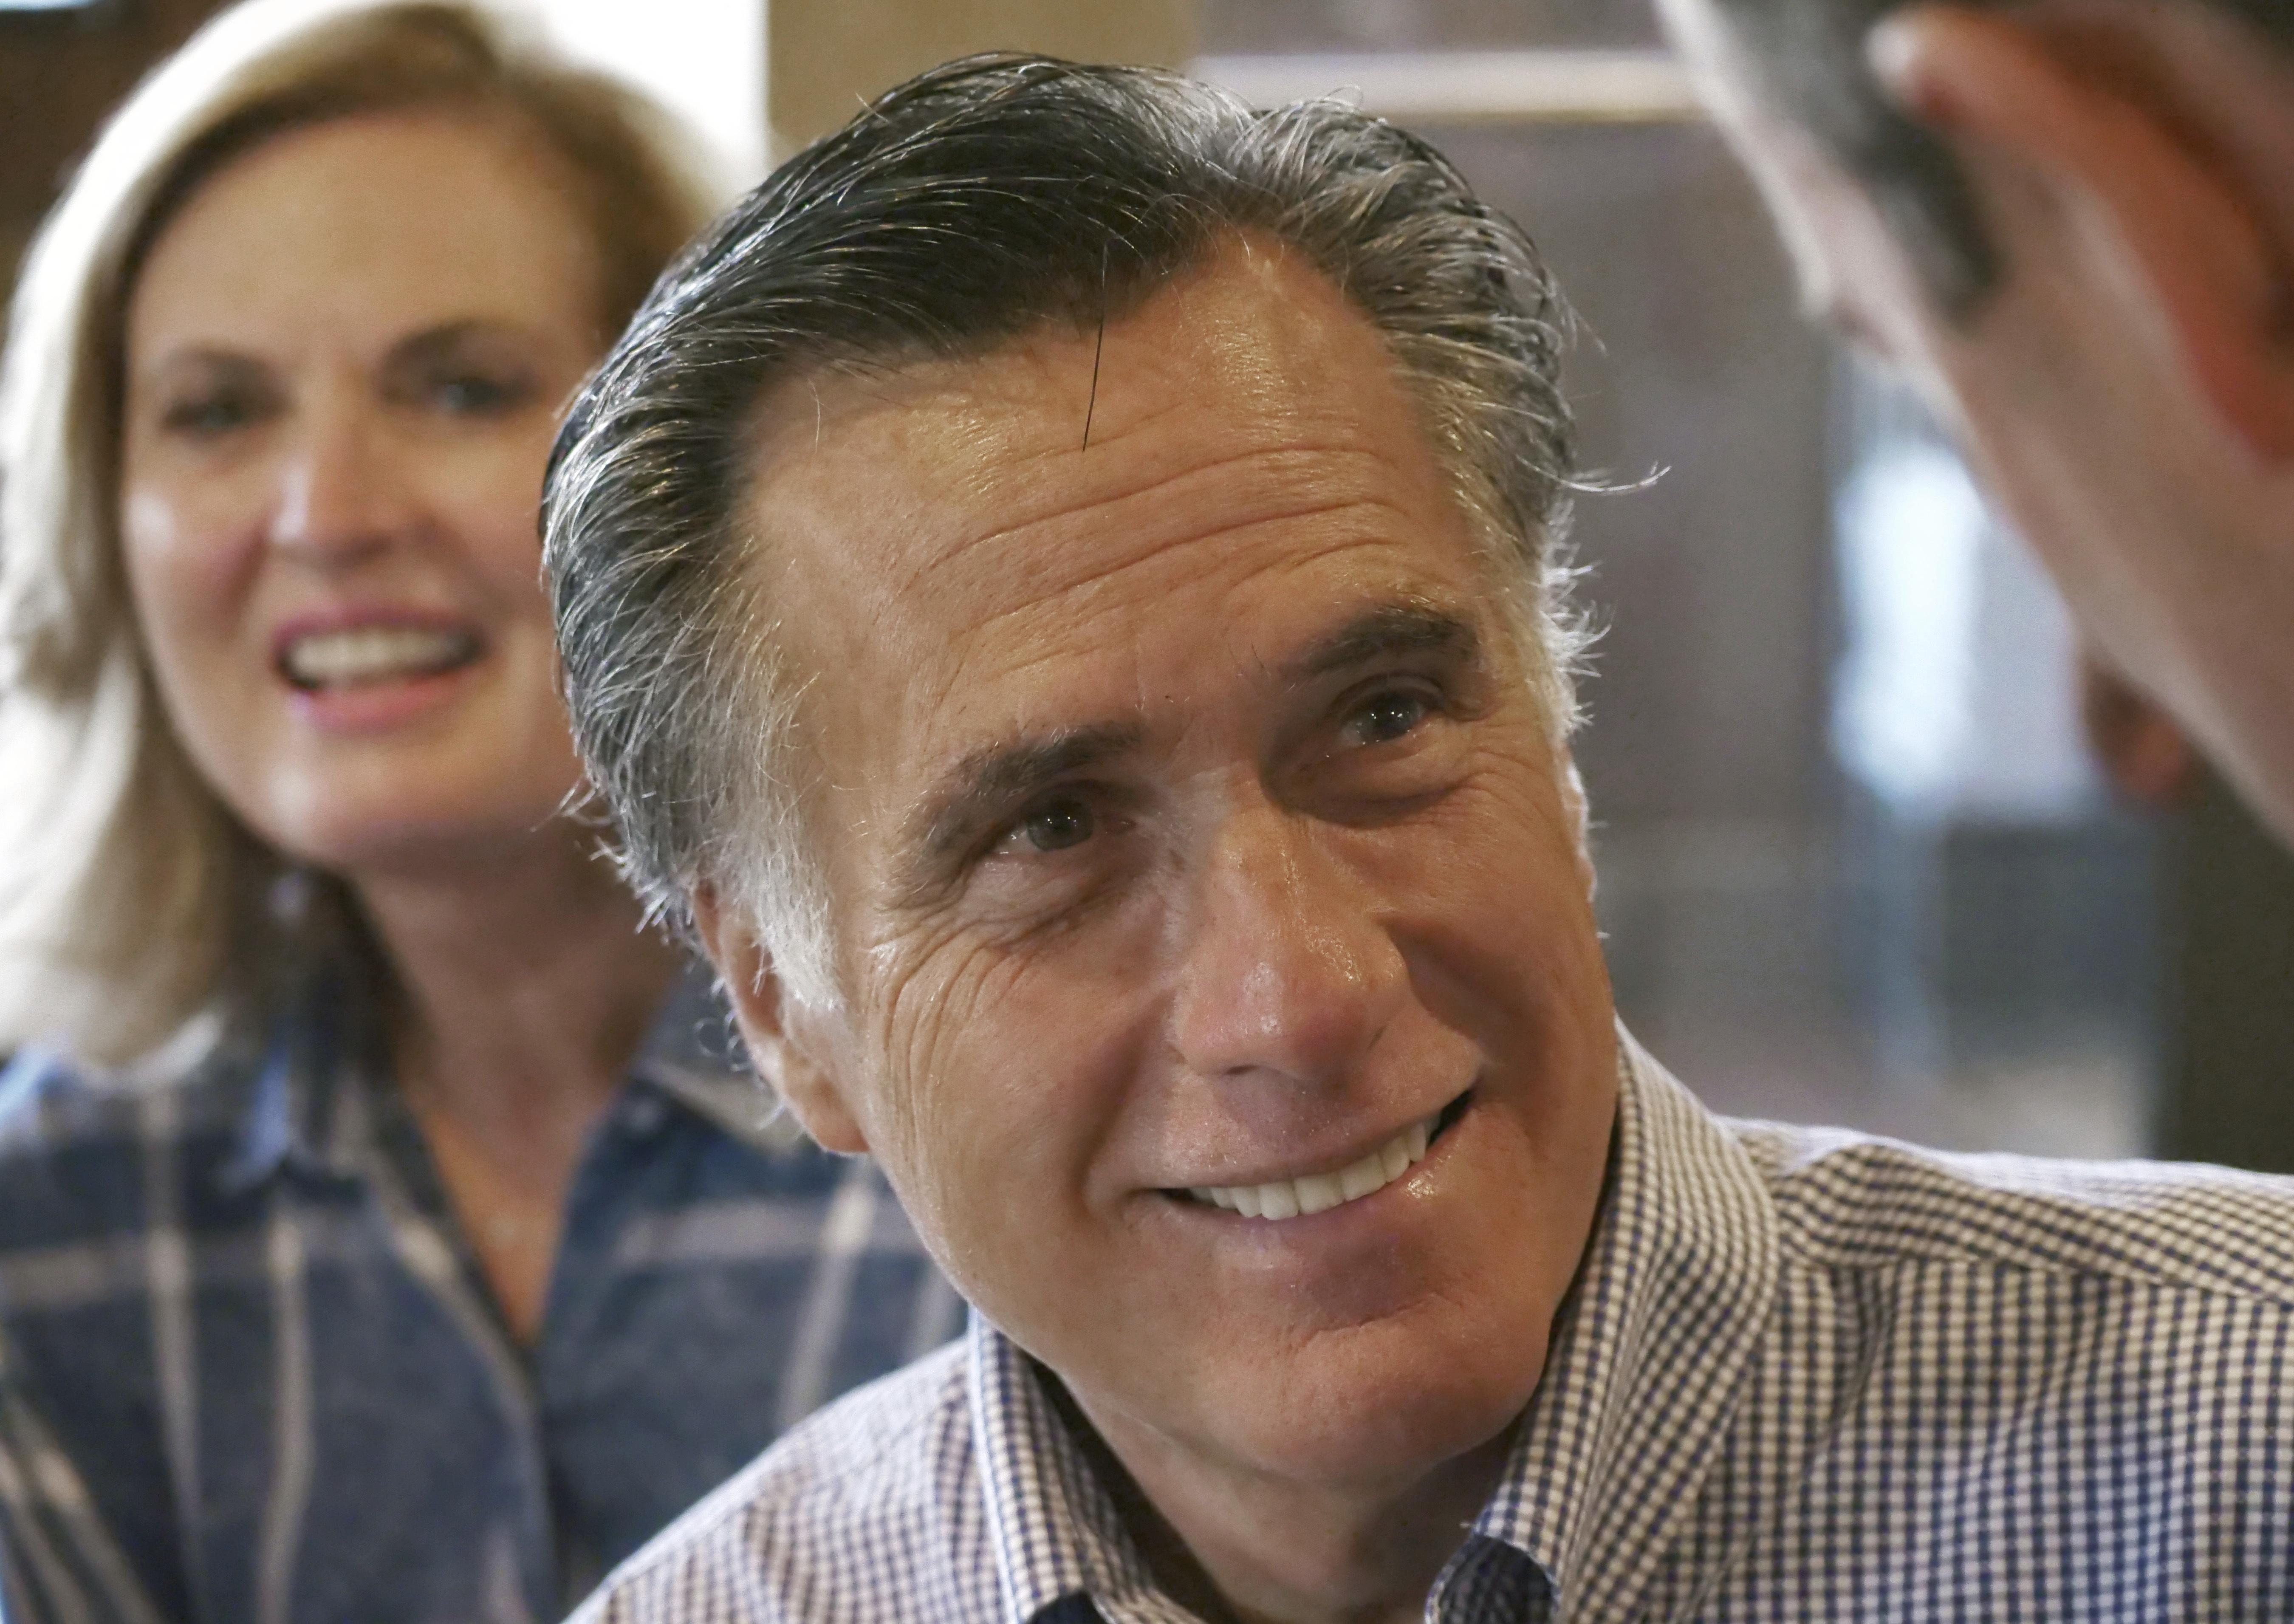 Mitt Romney Wins Gop Primary In Utah Senate Race The Spokesman Review